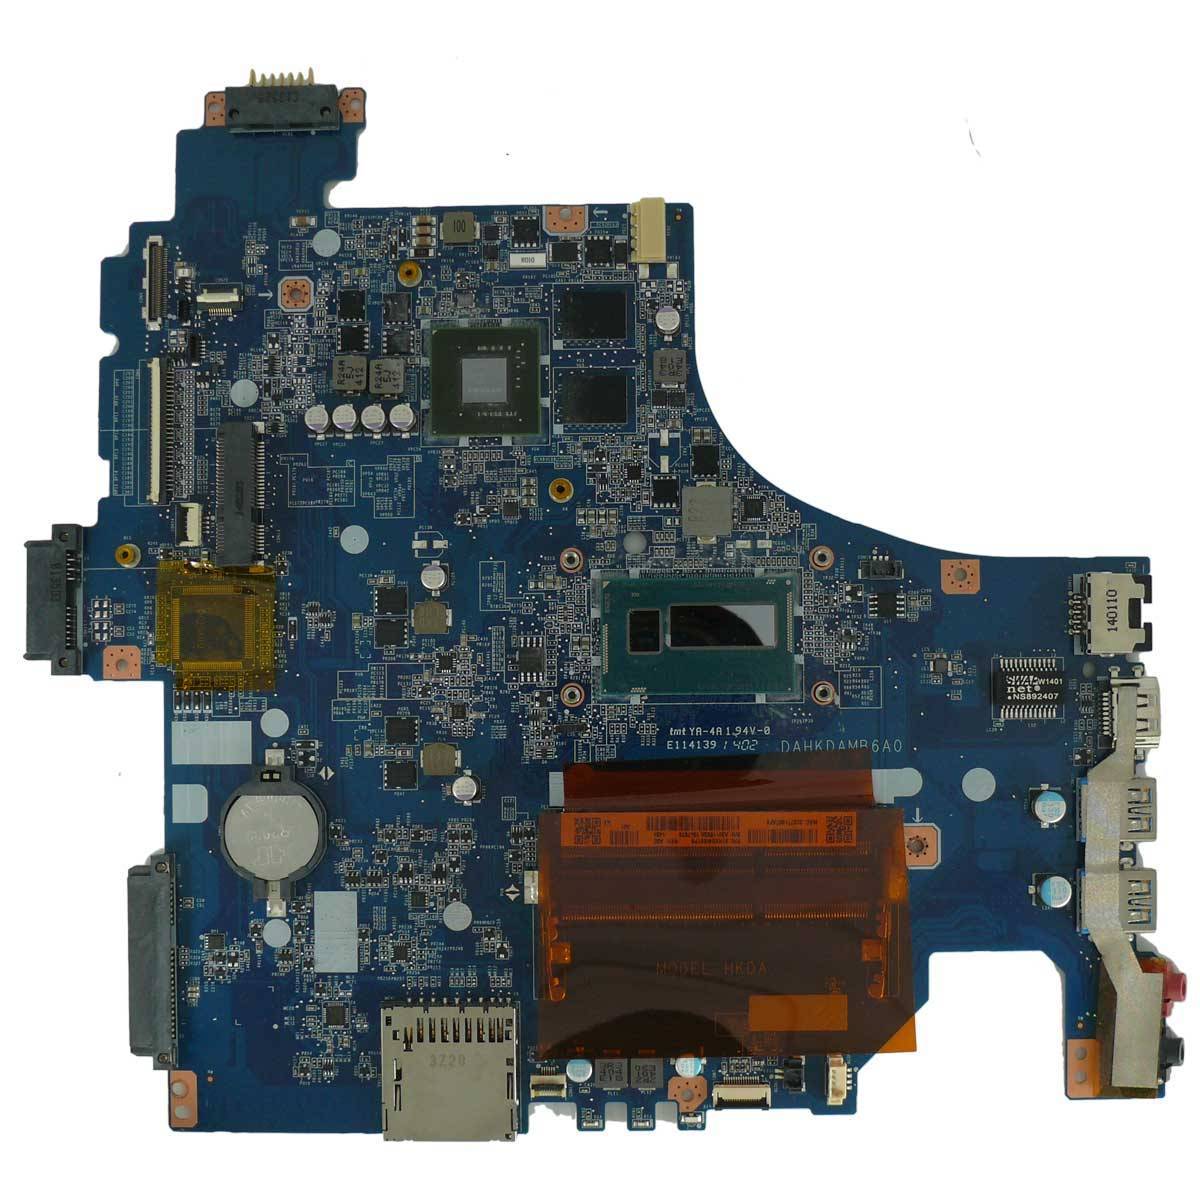 Sony Mainboard DAHKDAMB6A0 Svf15 ge